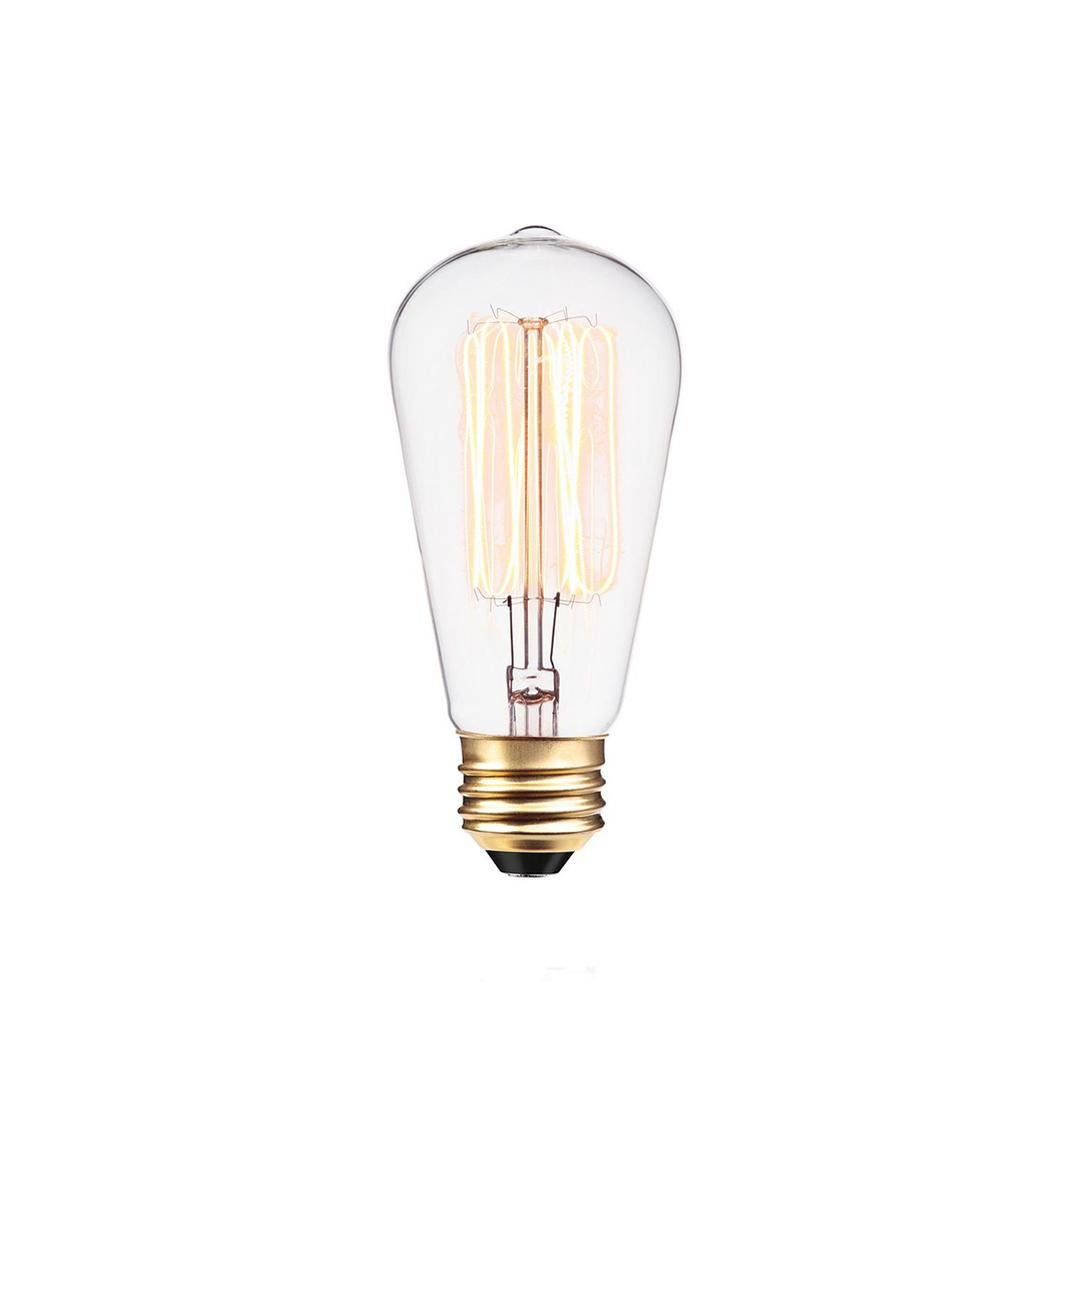 Curveaceous Contemporary Solid Copper Pendant Lamp For Sale 6